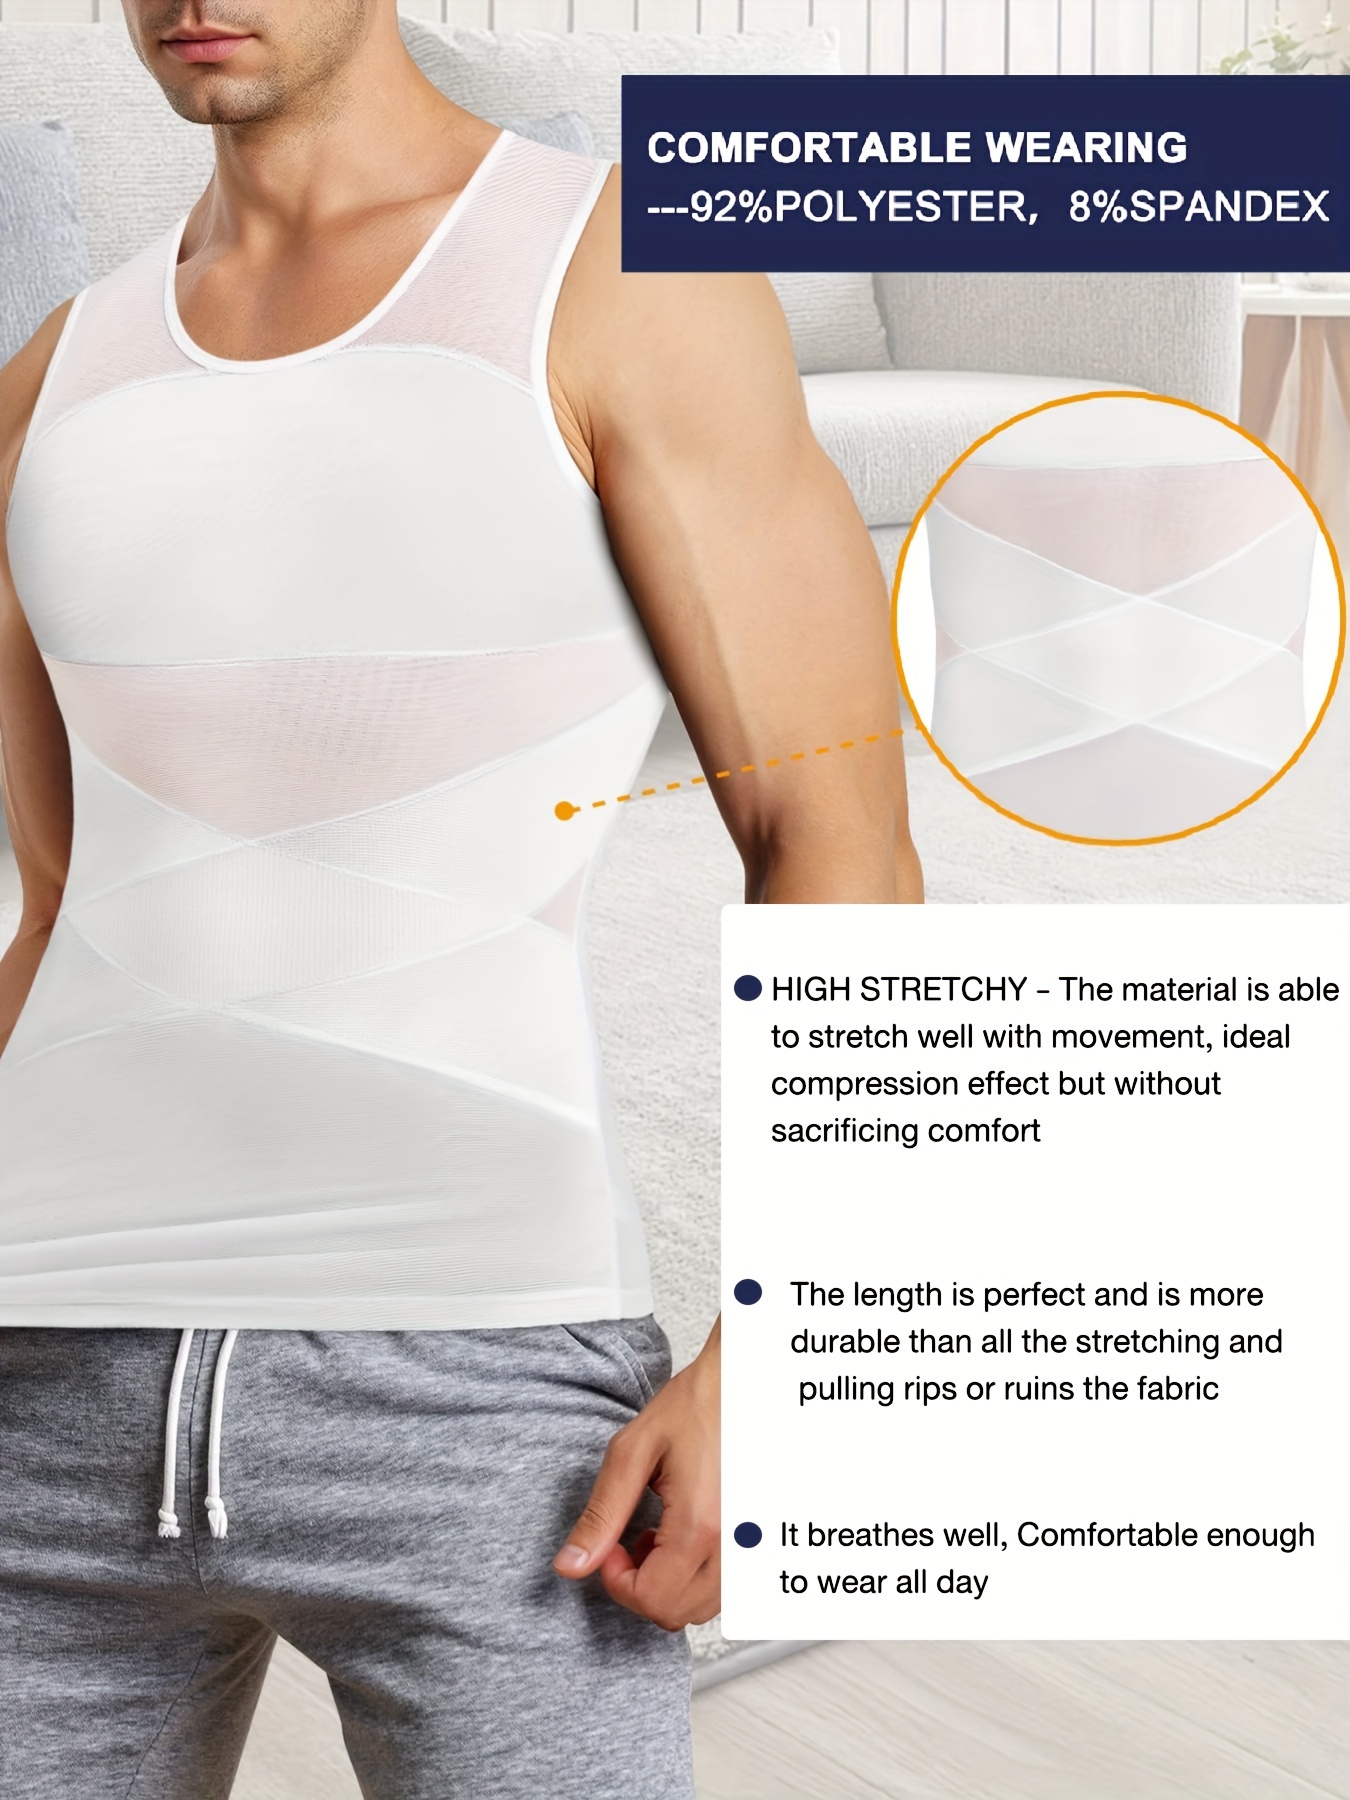 COMFREE Men's Compression Shirt Slimming Shapewear Body Shaper